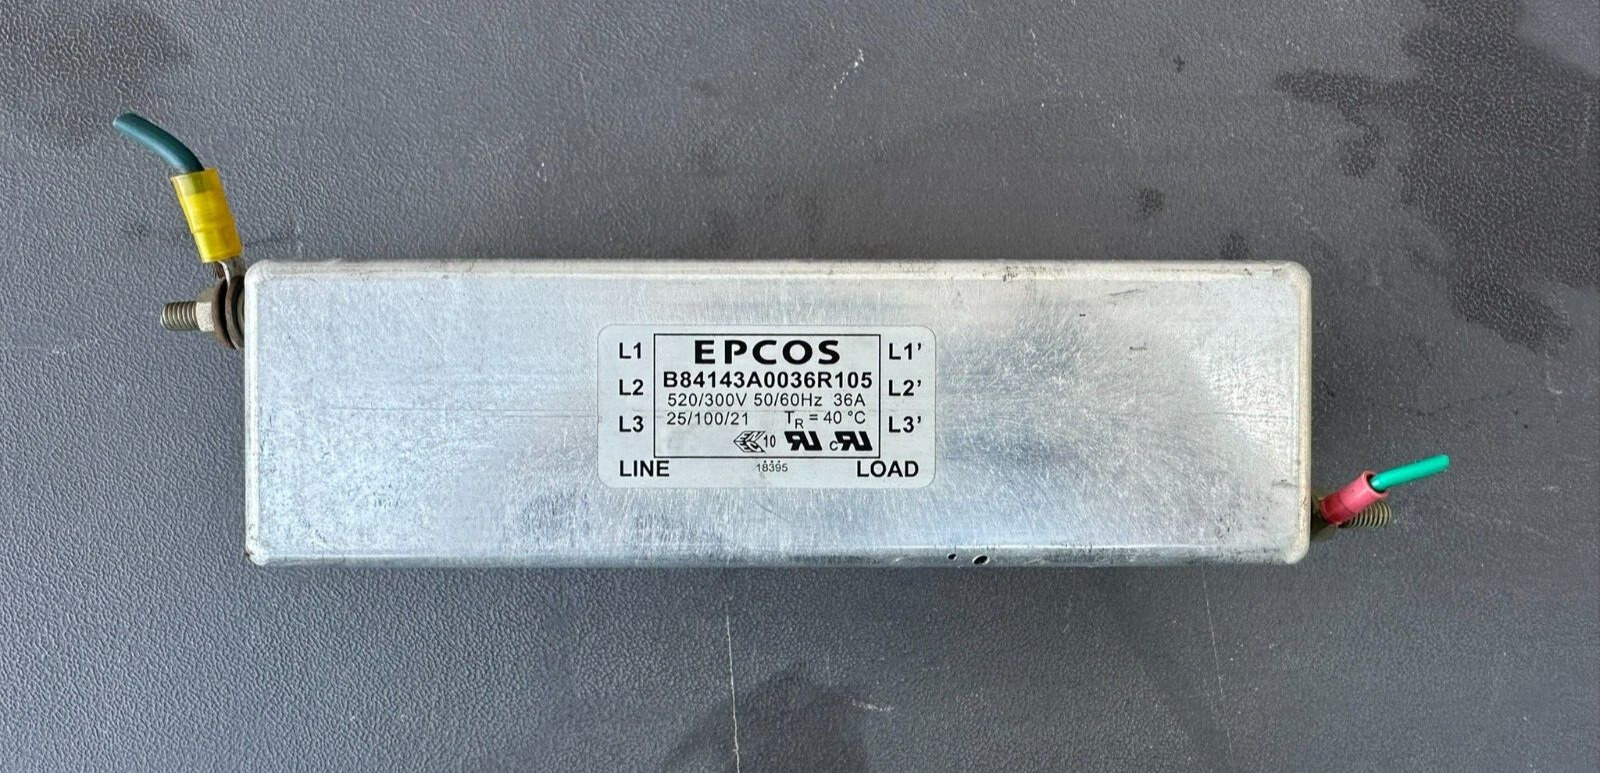 TDK EPCOS B84143A0036R105 Power Line EMI/EMC Filter, 3Ph, 36A, 520/300VAC